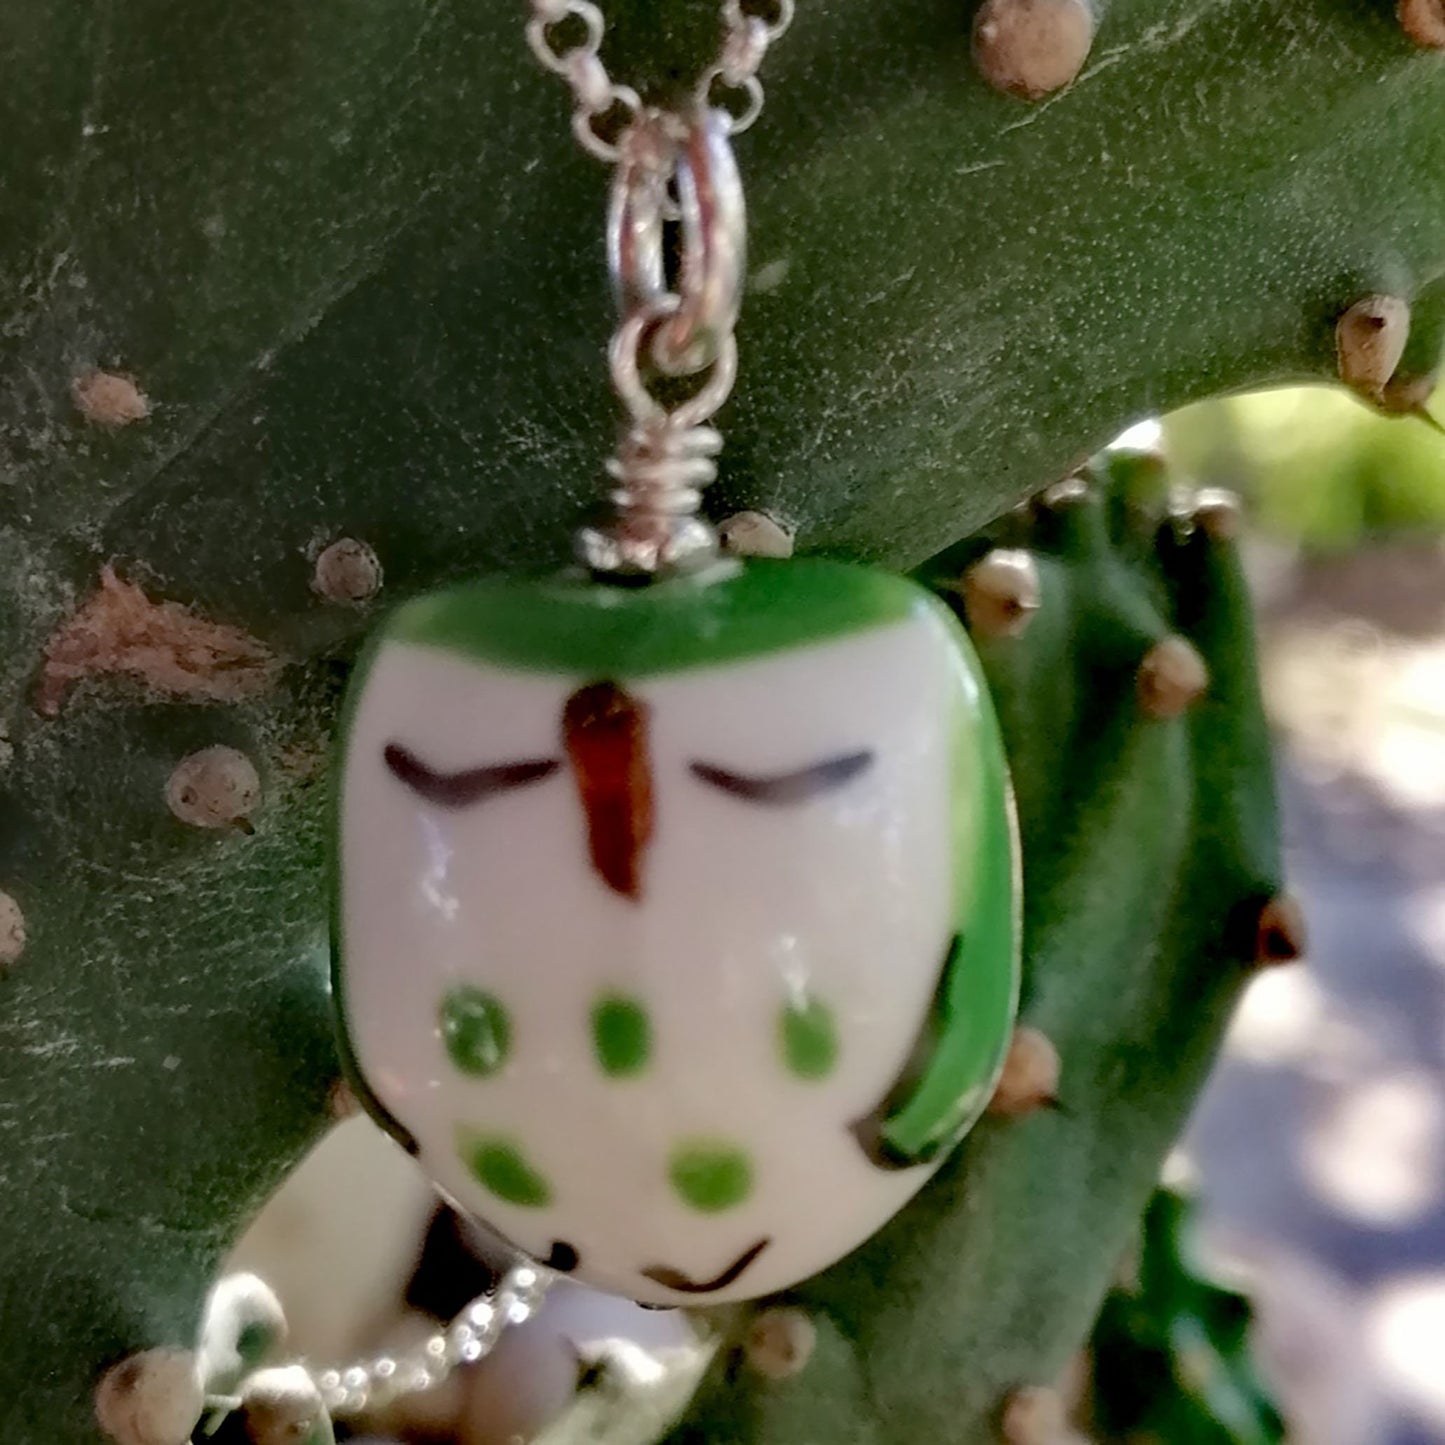 Sleepy Green Owl Necklace and Earring Set